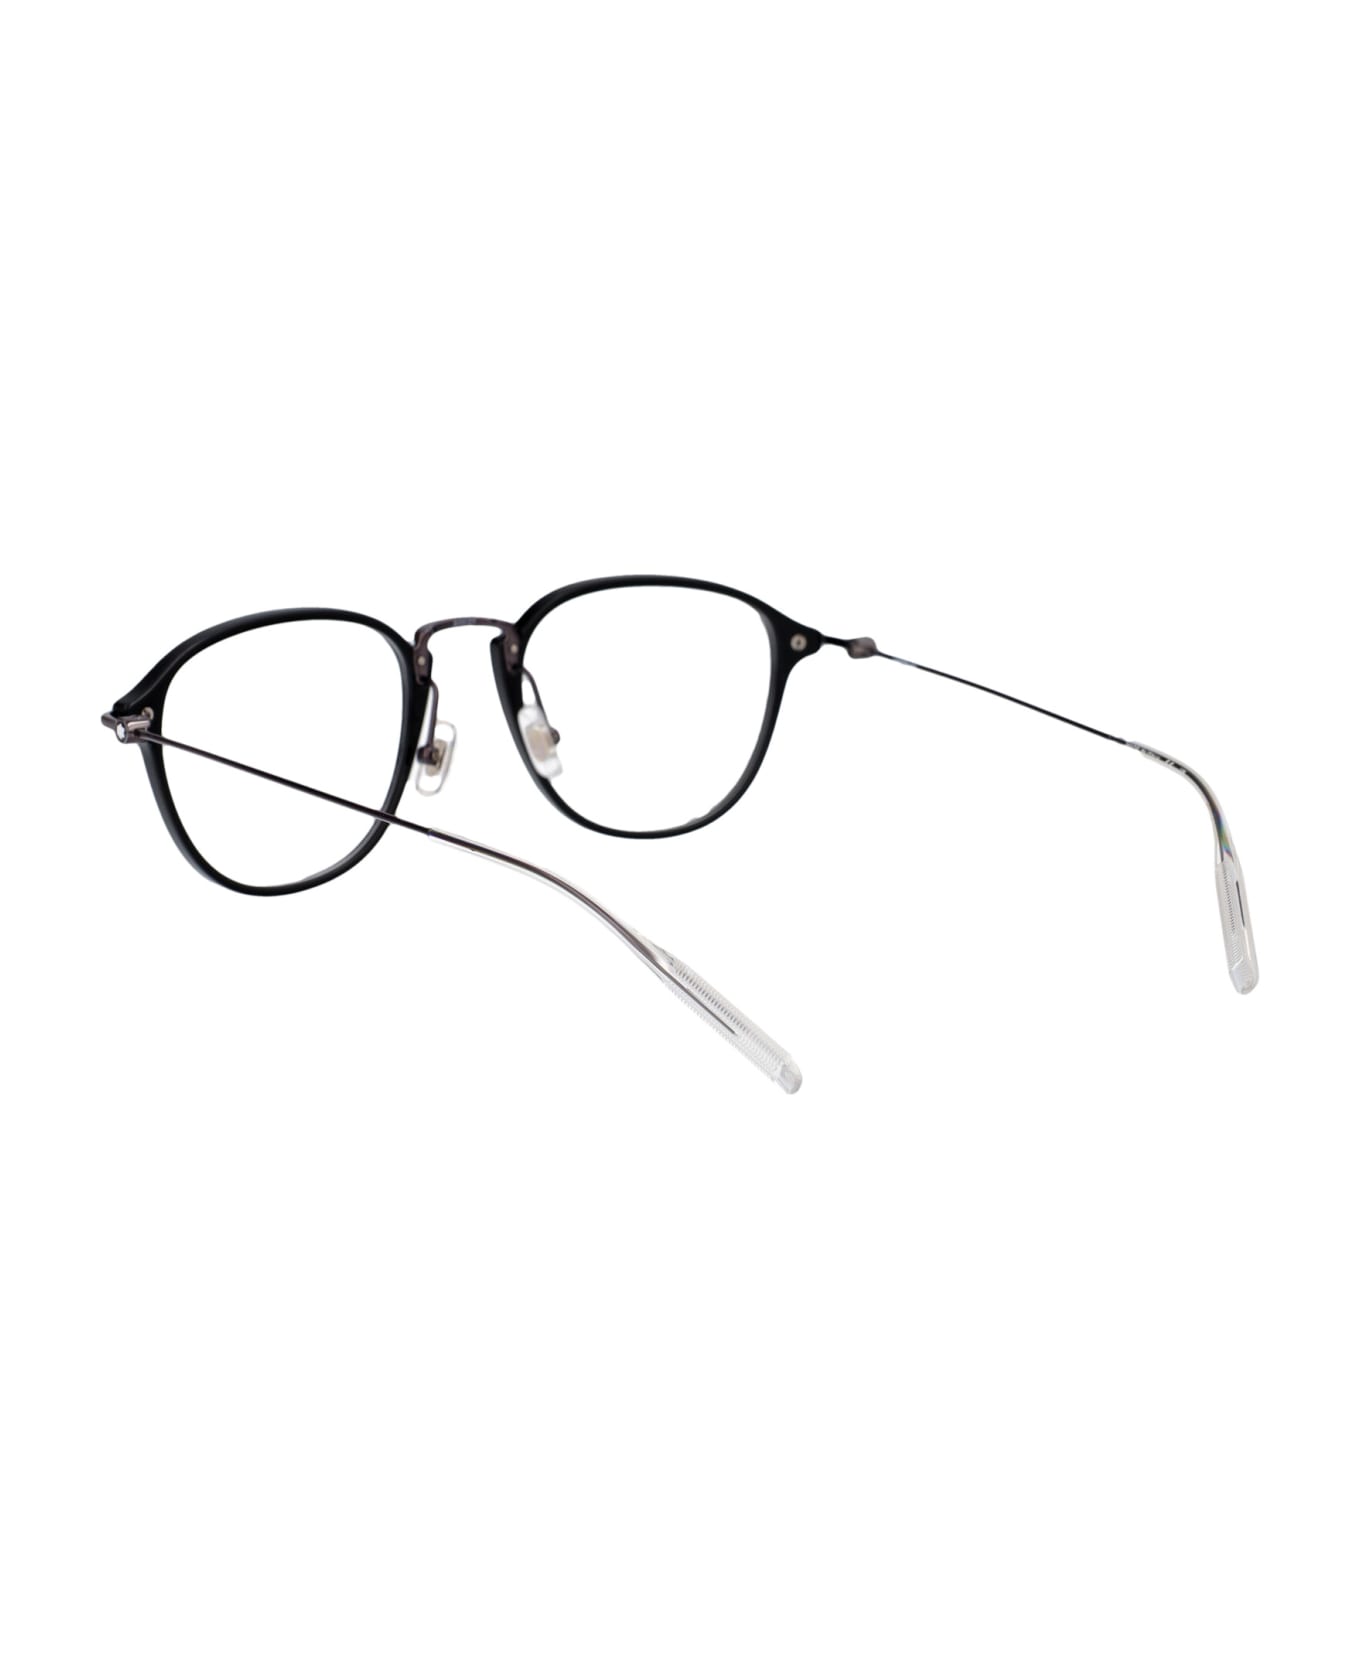 Montblanc Mb0155o Glasses - 007 BLACK RUTHENIUM TRANSPARENT